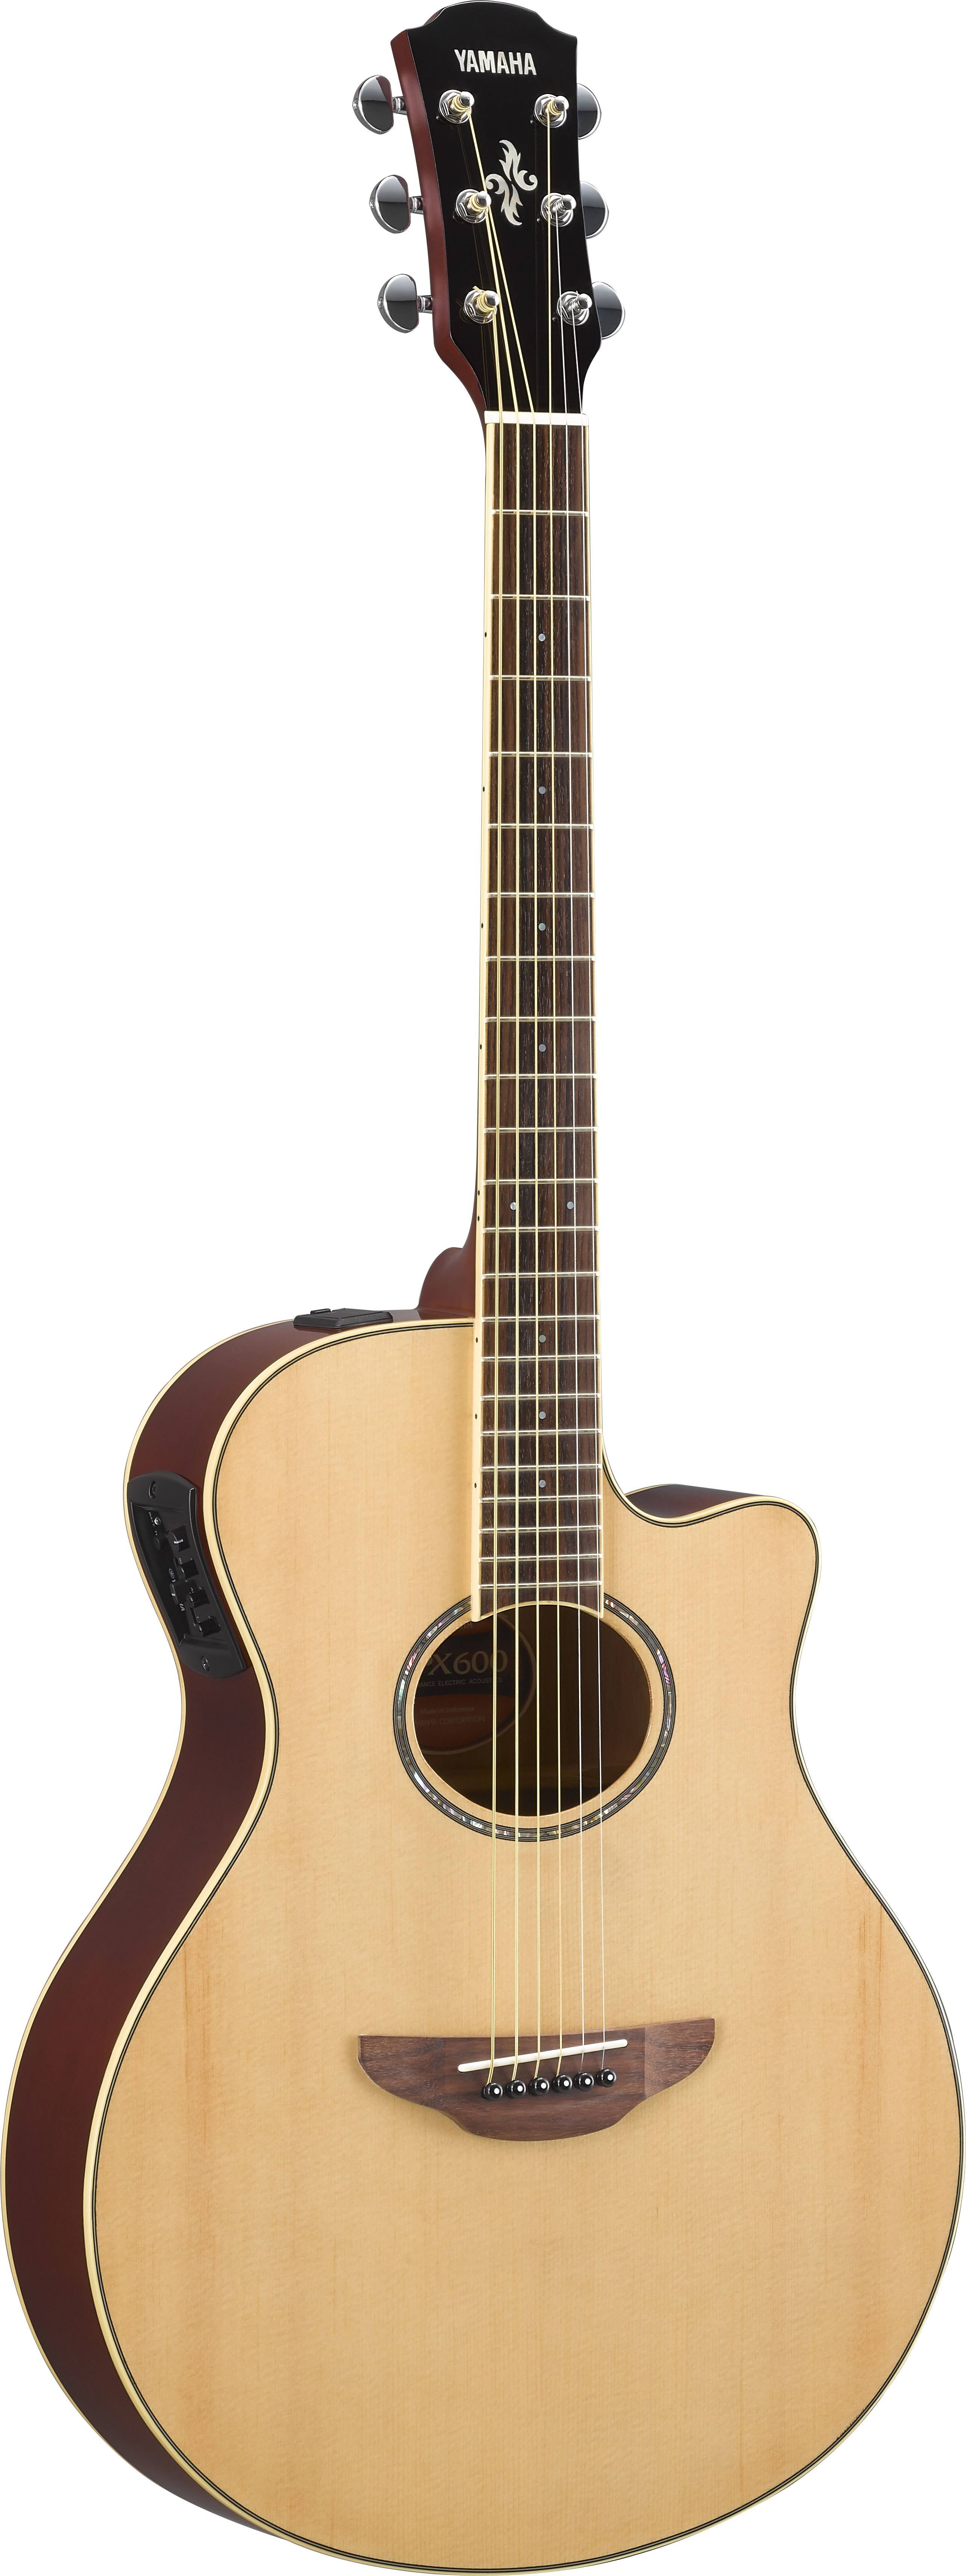 Yamaha APX600 Acoustic Electric Guitar (Natural)